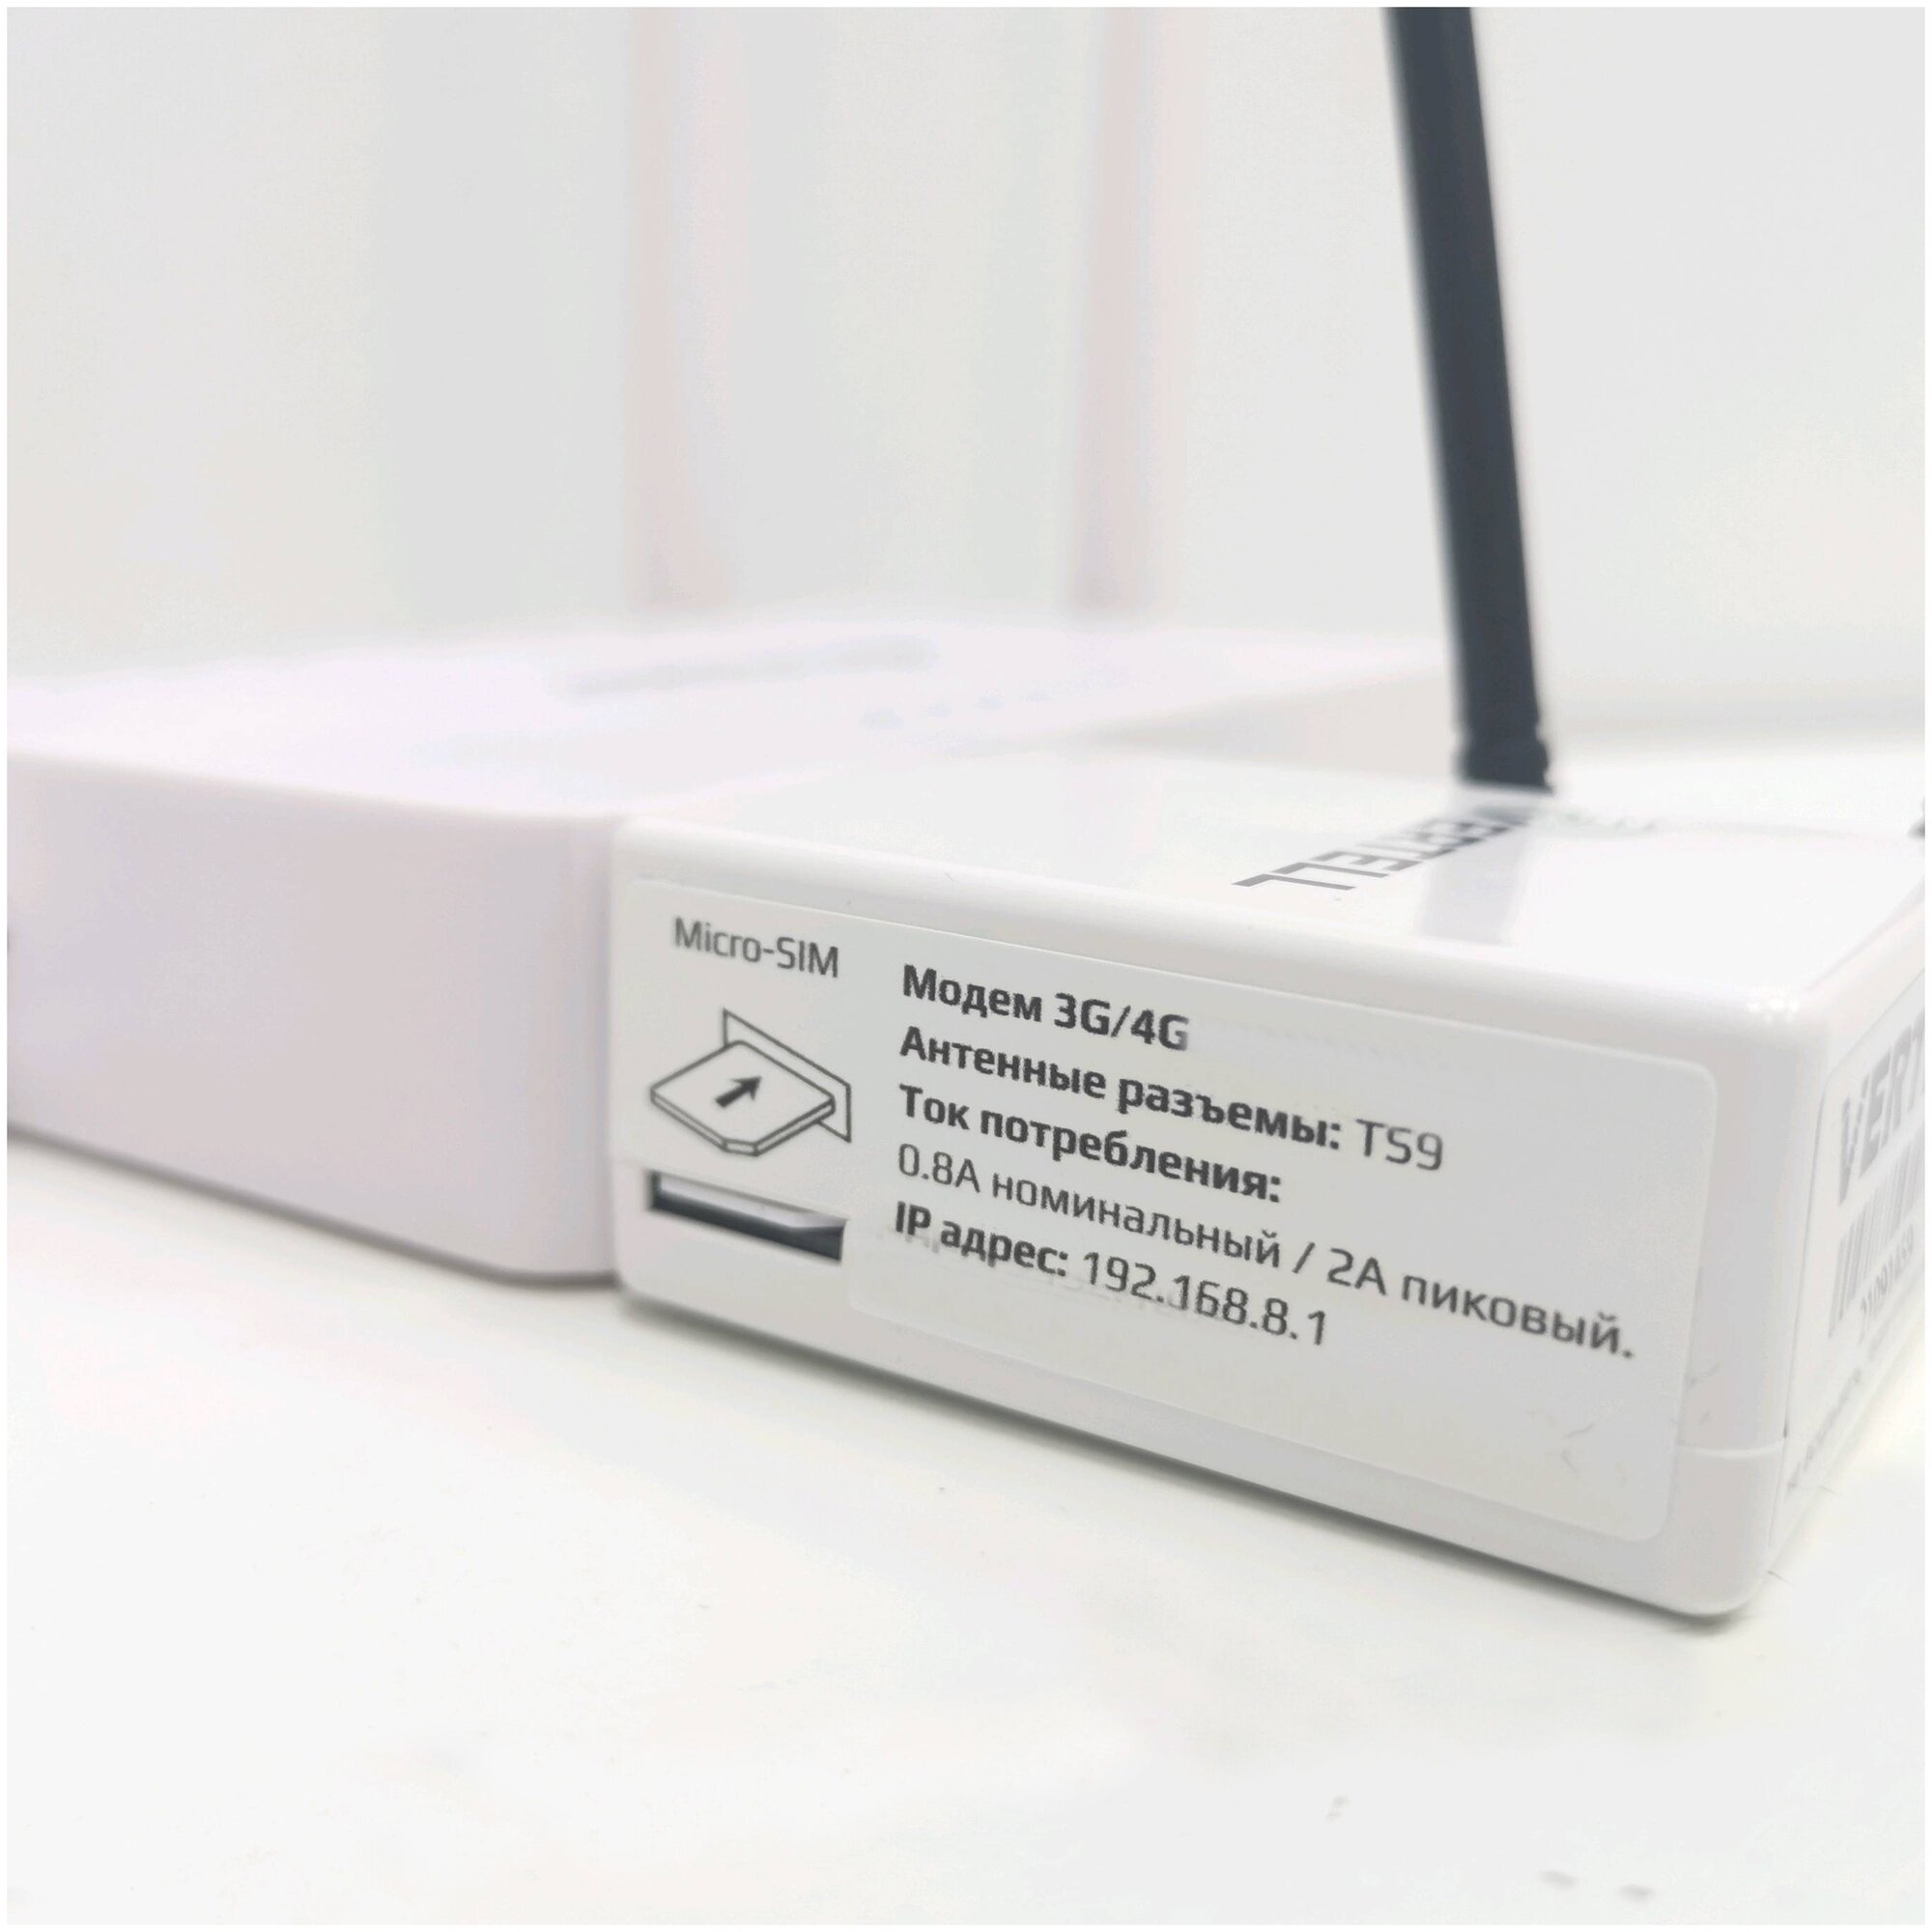 Комплект Интернета 4G LTE USB Модем iTCONNECT-PRO + WiFi Роутер для Интернета с iMEi \ TTL